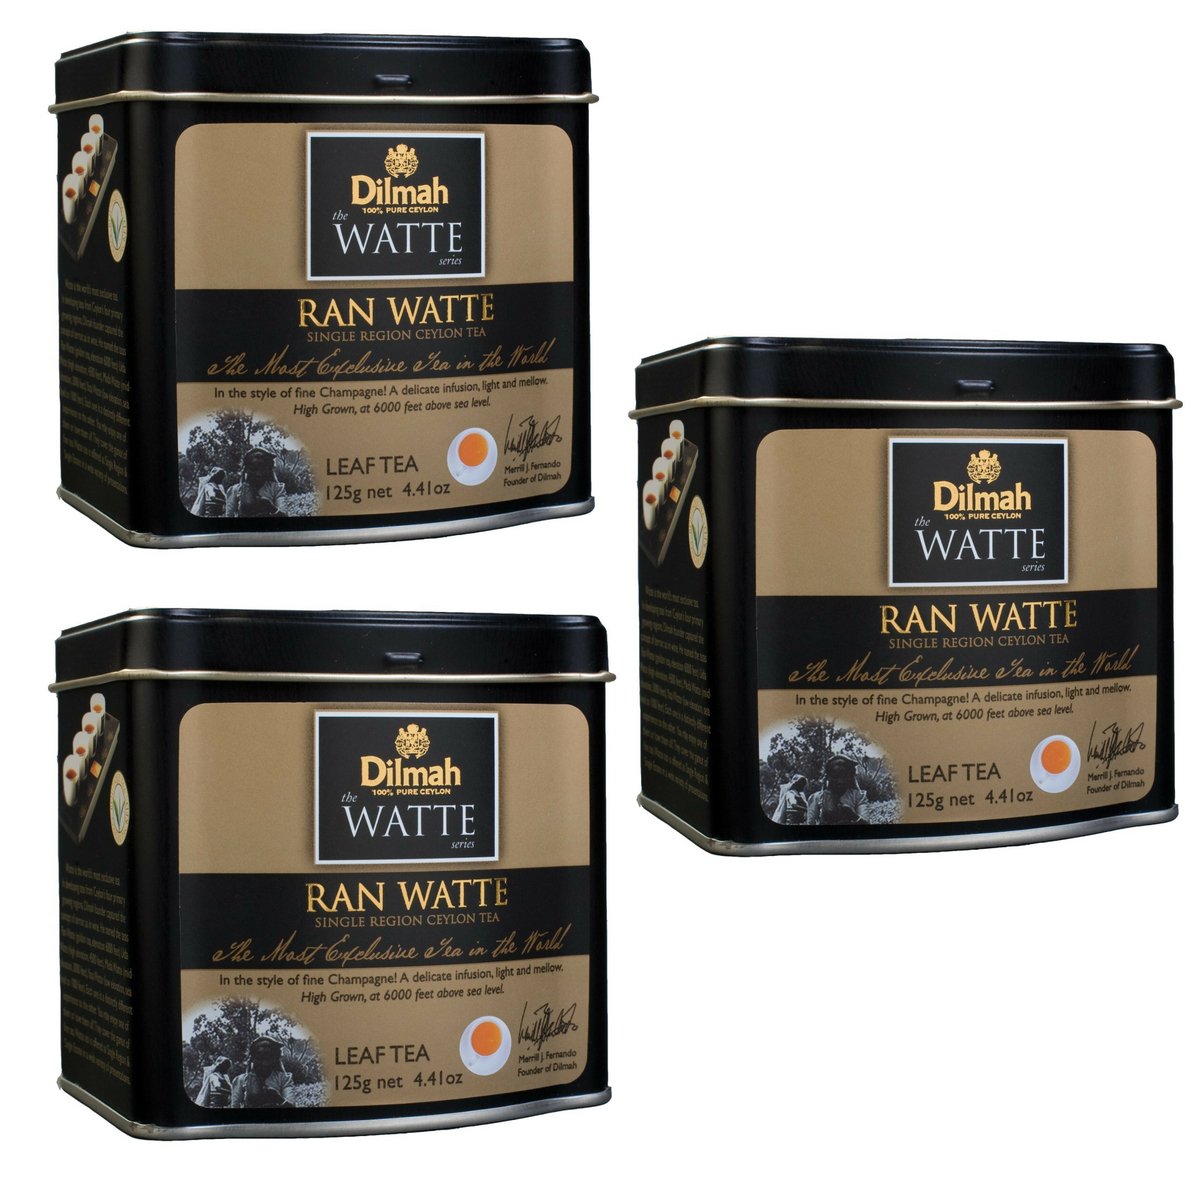 Dilmah Tea Ran Watte Loose Leaf Tea in Tin Caddy 125g (4.41oz) X 3 Pack - Single Region Pure Ceylon Black Tea